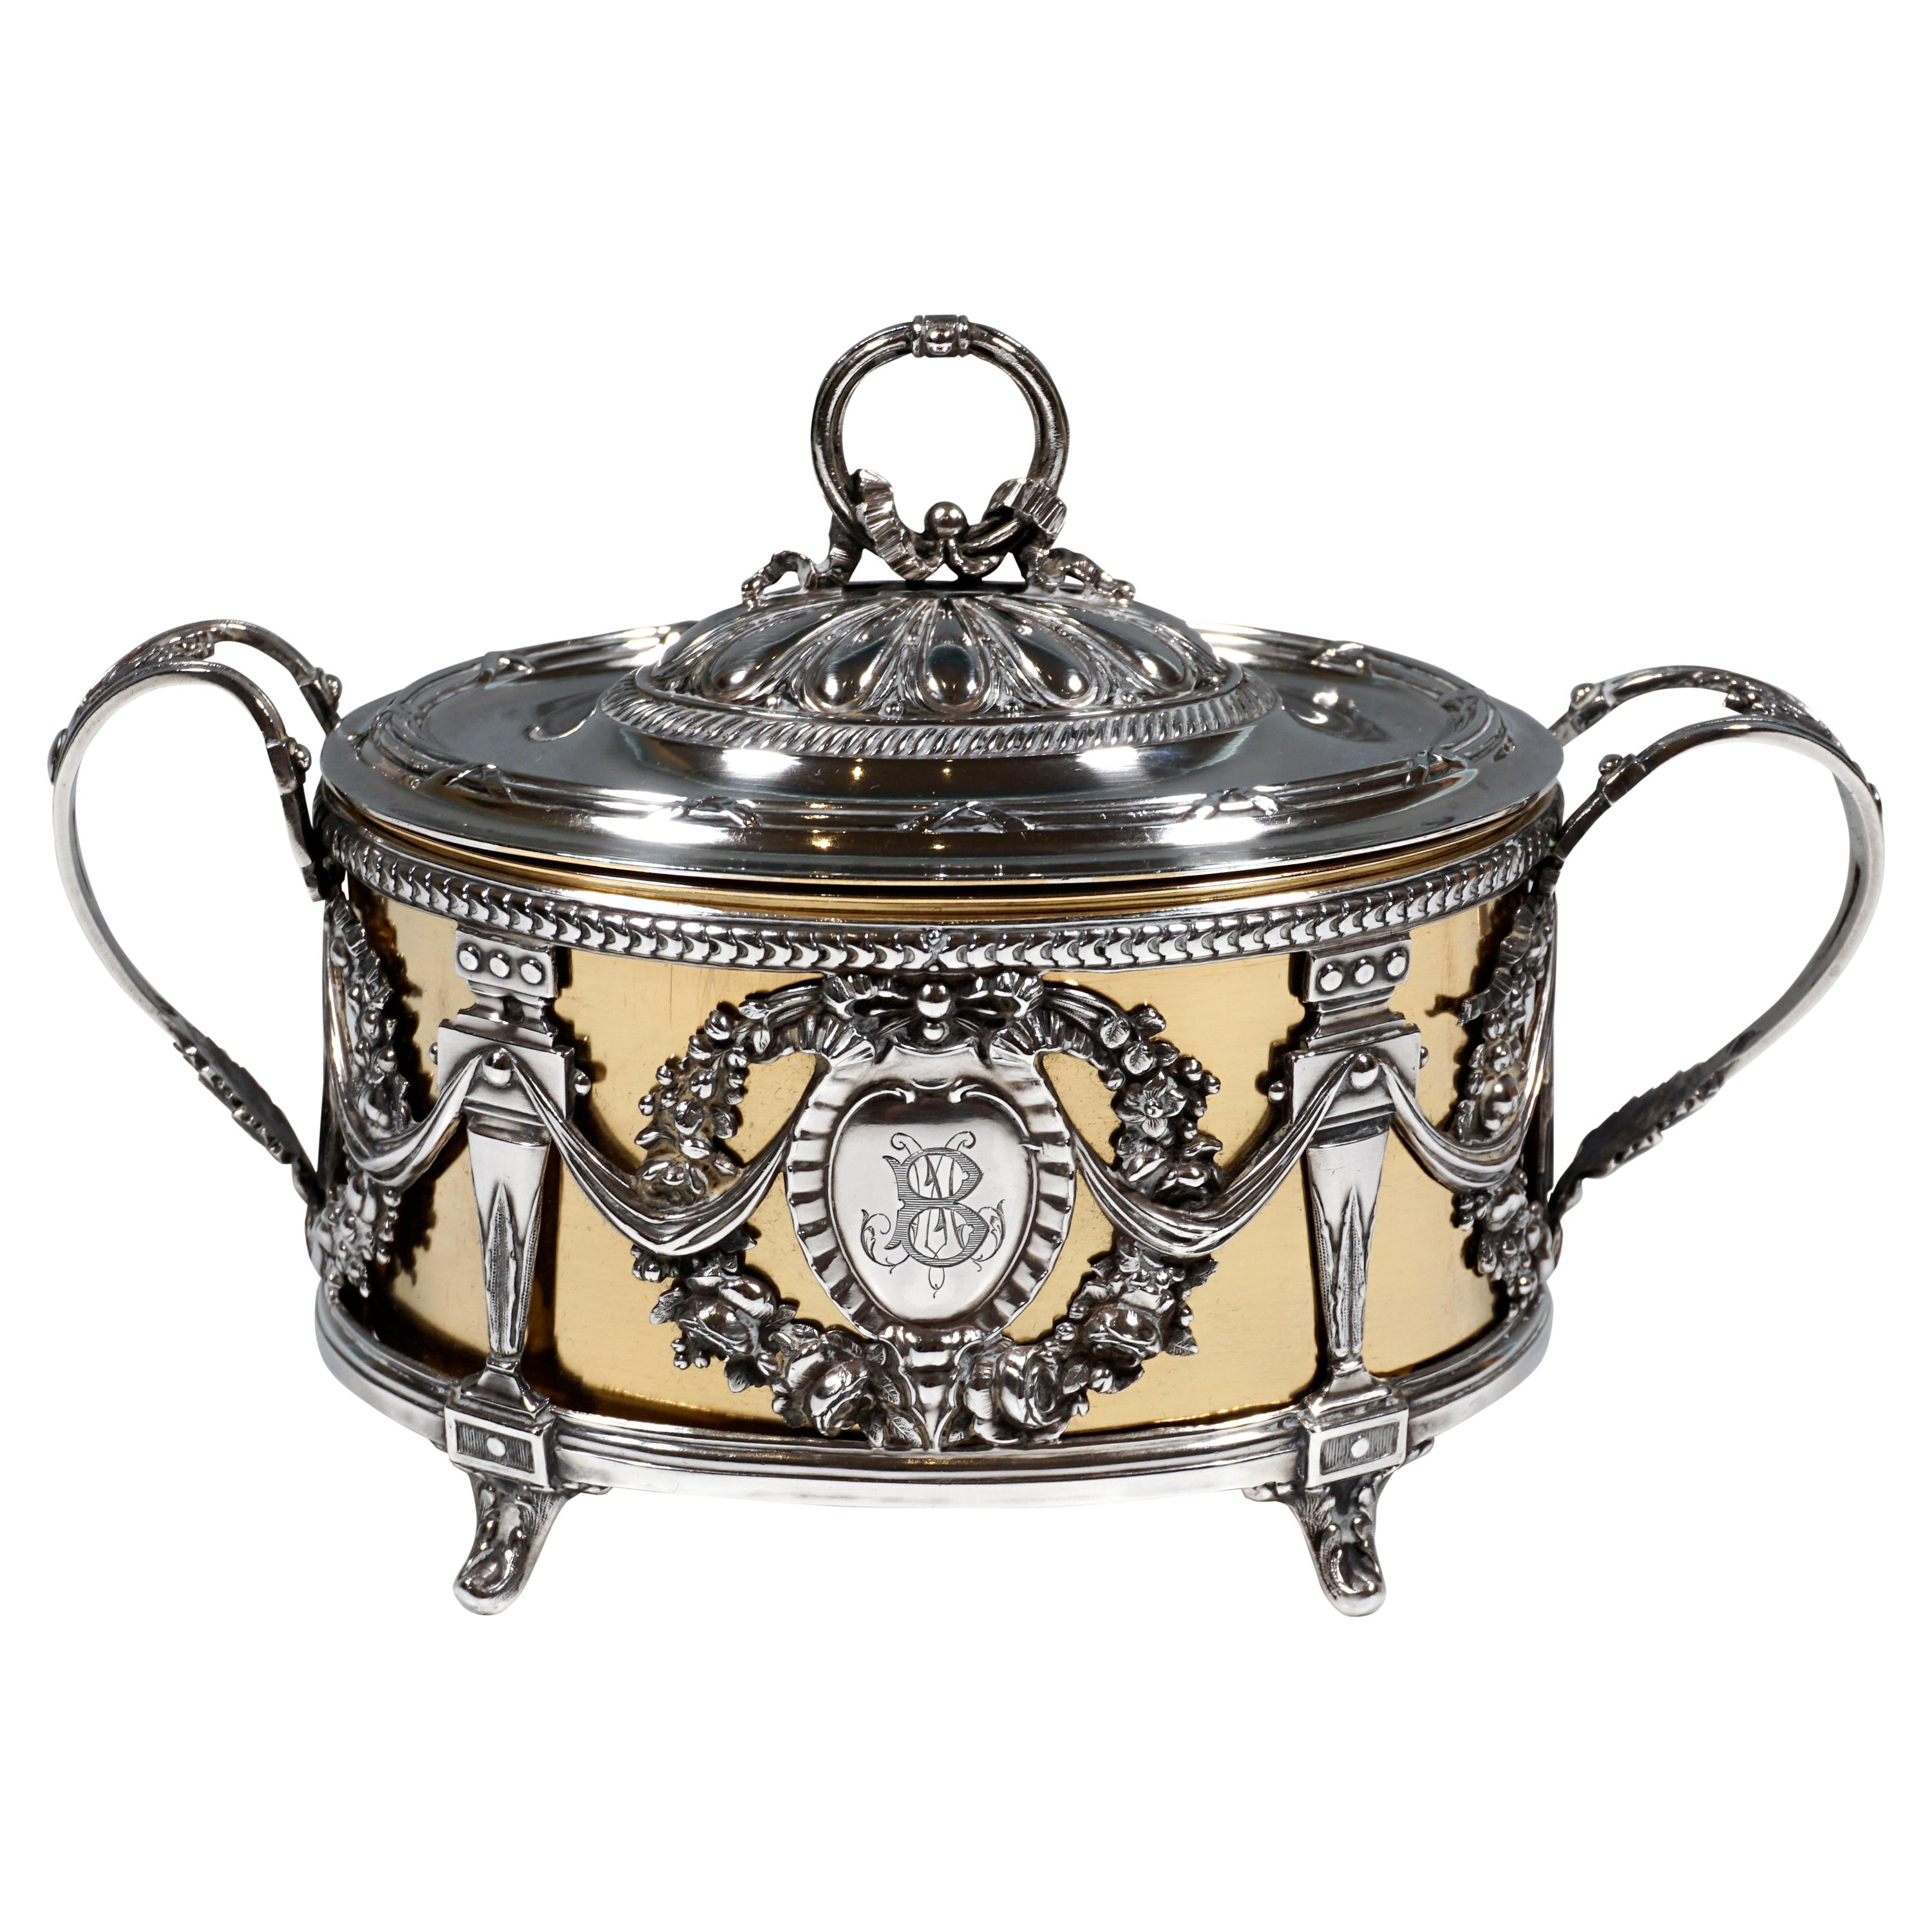 Silver Plate Sugar Bowl Richly Ornamented For Sugar Caviar Vintage Antique 